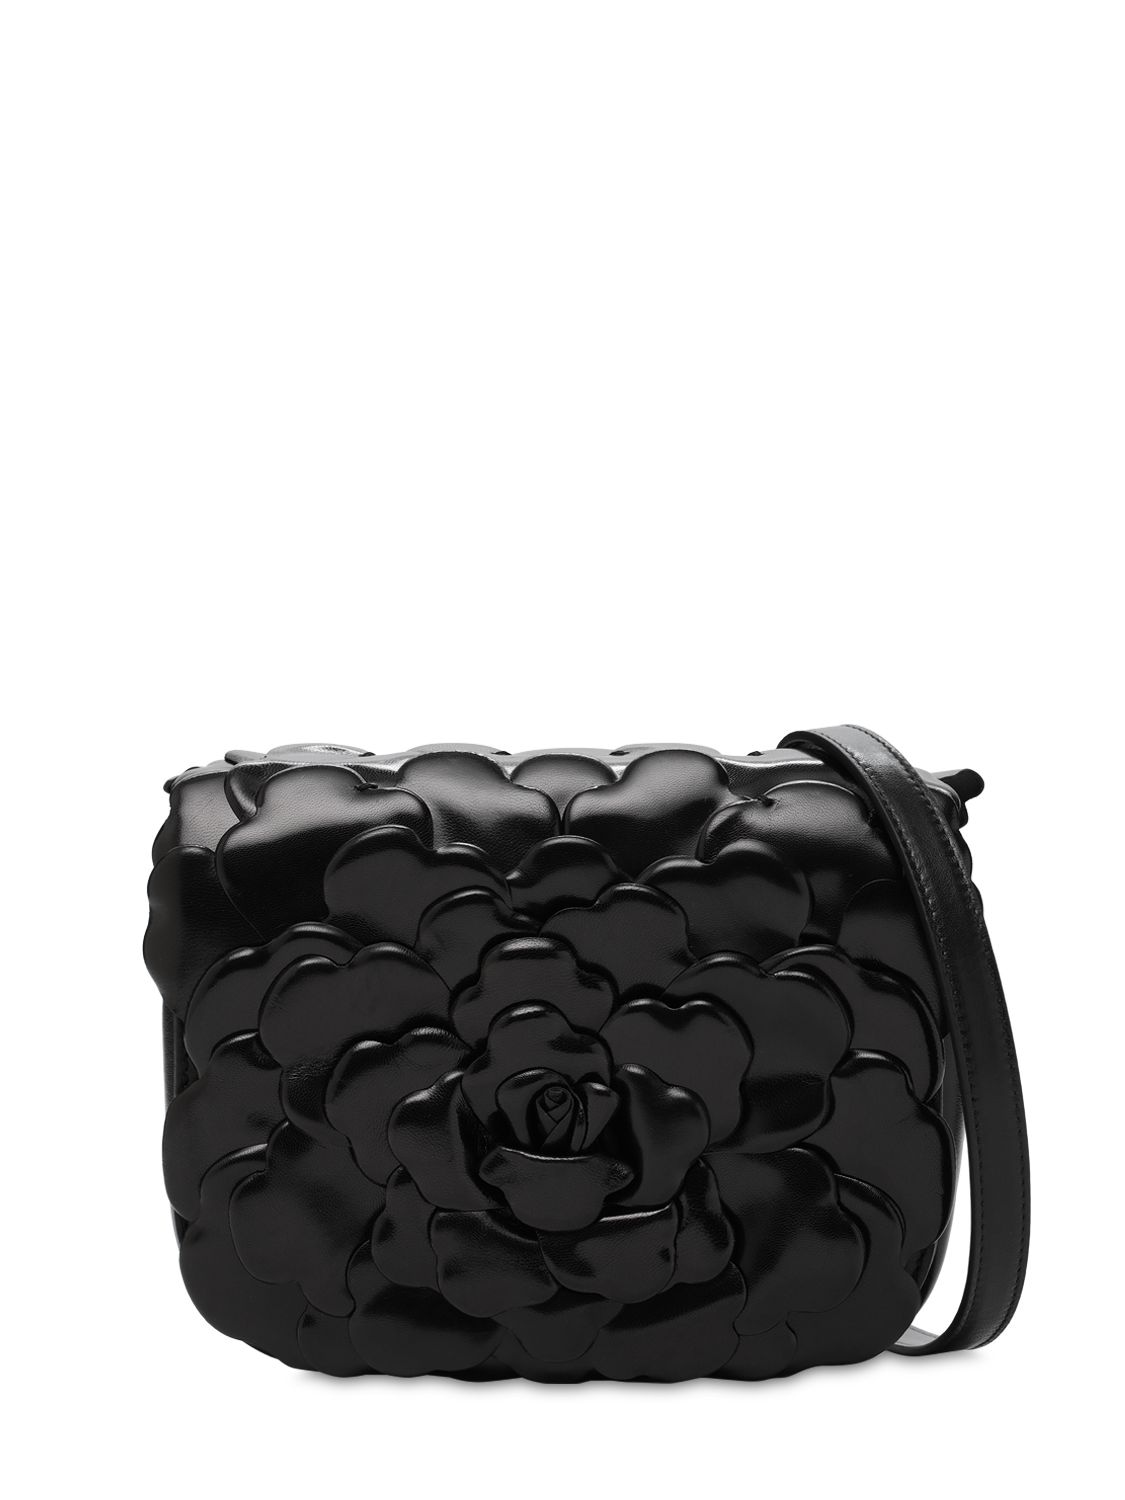 Valentino Garavani Atelier Petals Leather Shoulder Bag In Black